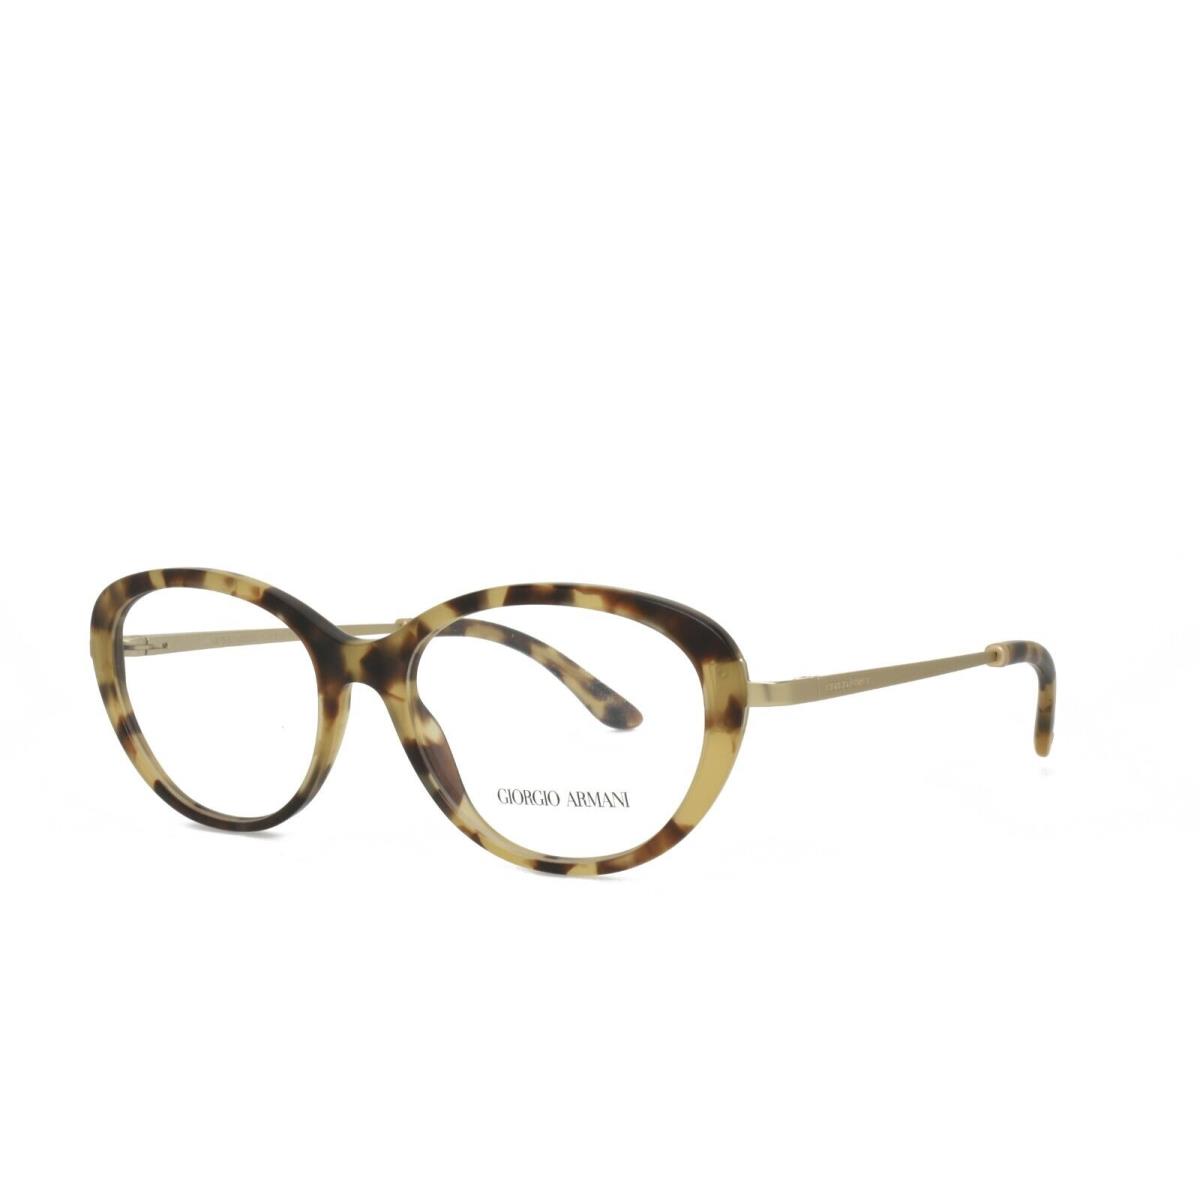 Giorgio Armani 7046 5282 54-16-140 Tortoise Eyeglasses Frames